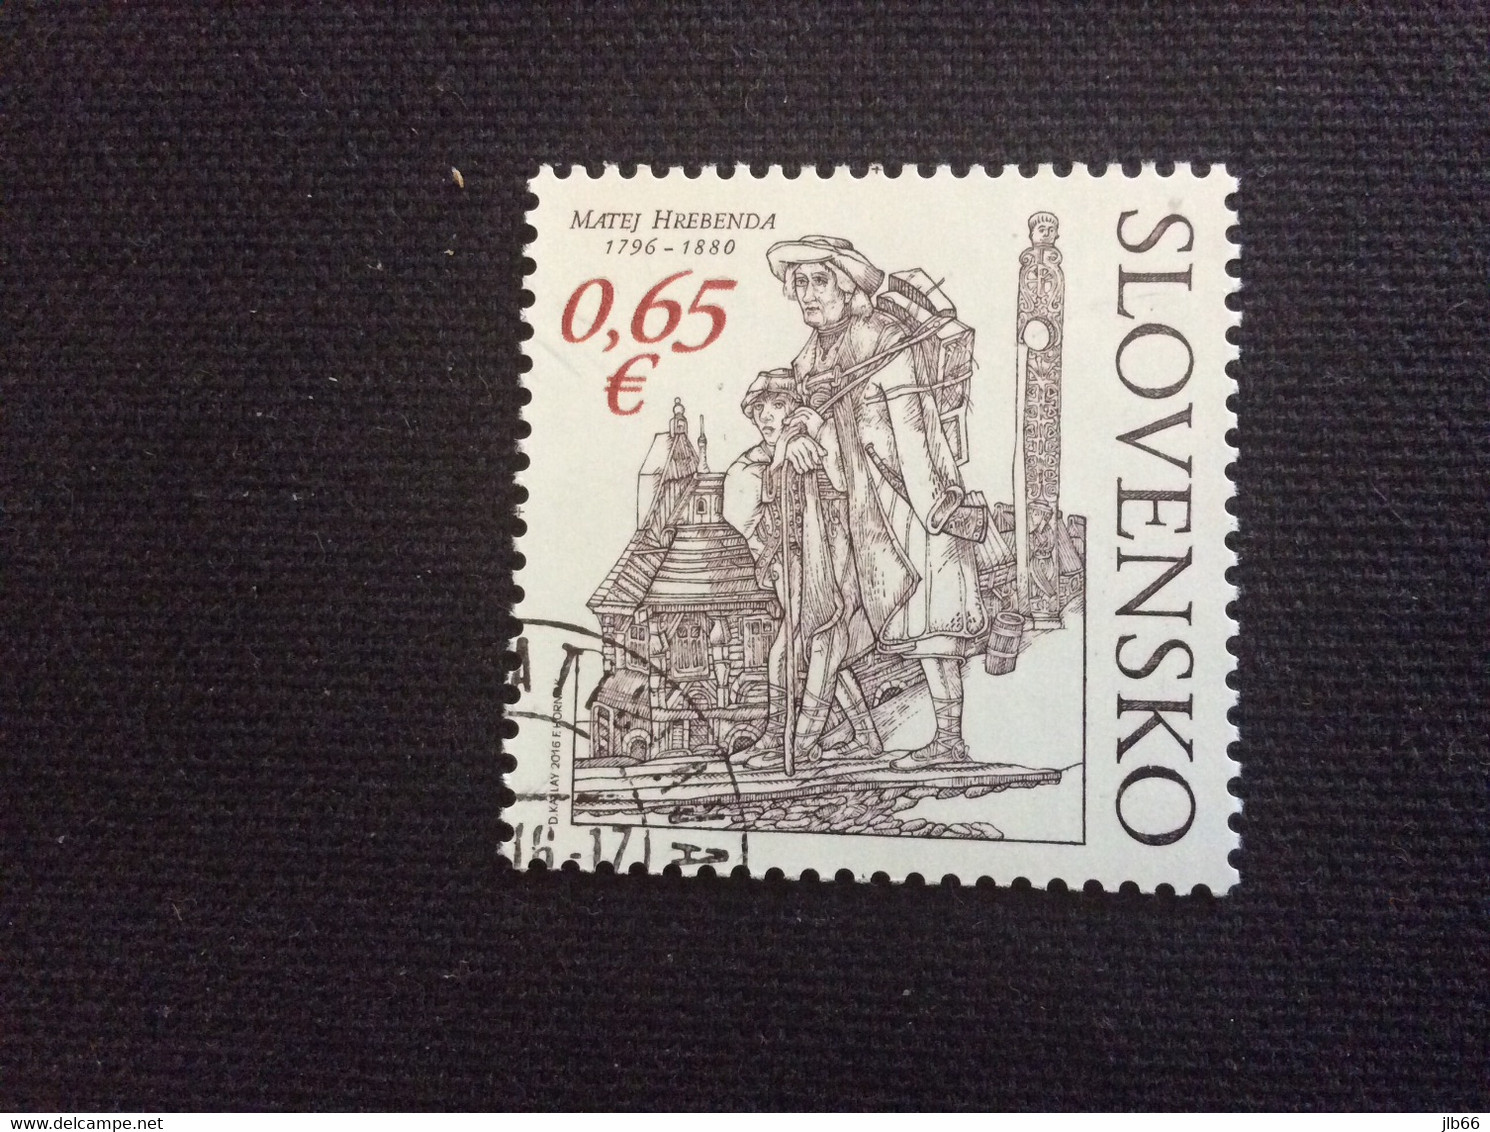 Slovaquie 2016 Yvert 686 Oblitéré Matej HREBENDA Marchand Ambulant De Livres (1796-1880) - Used Stamps